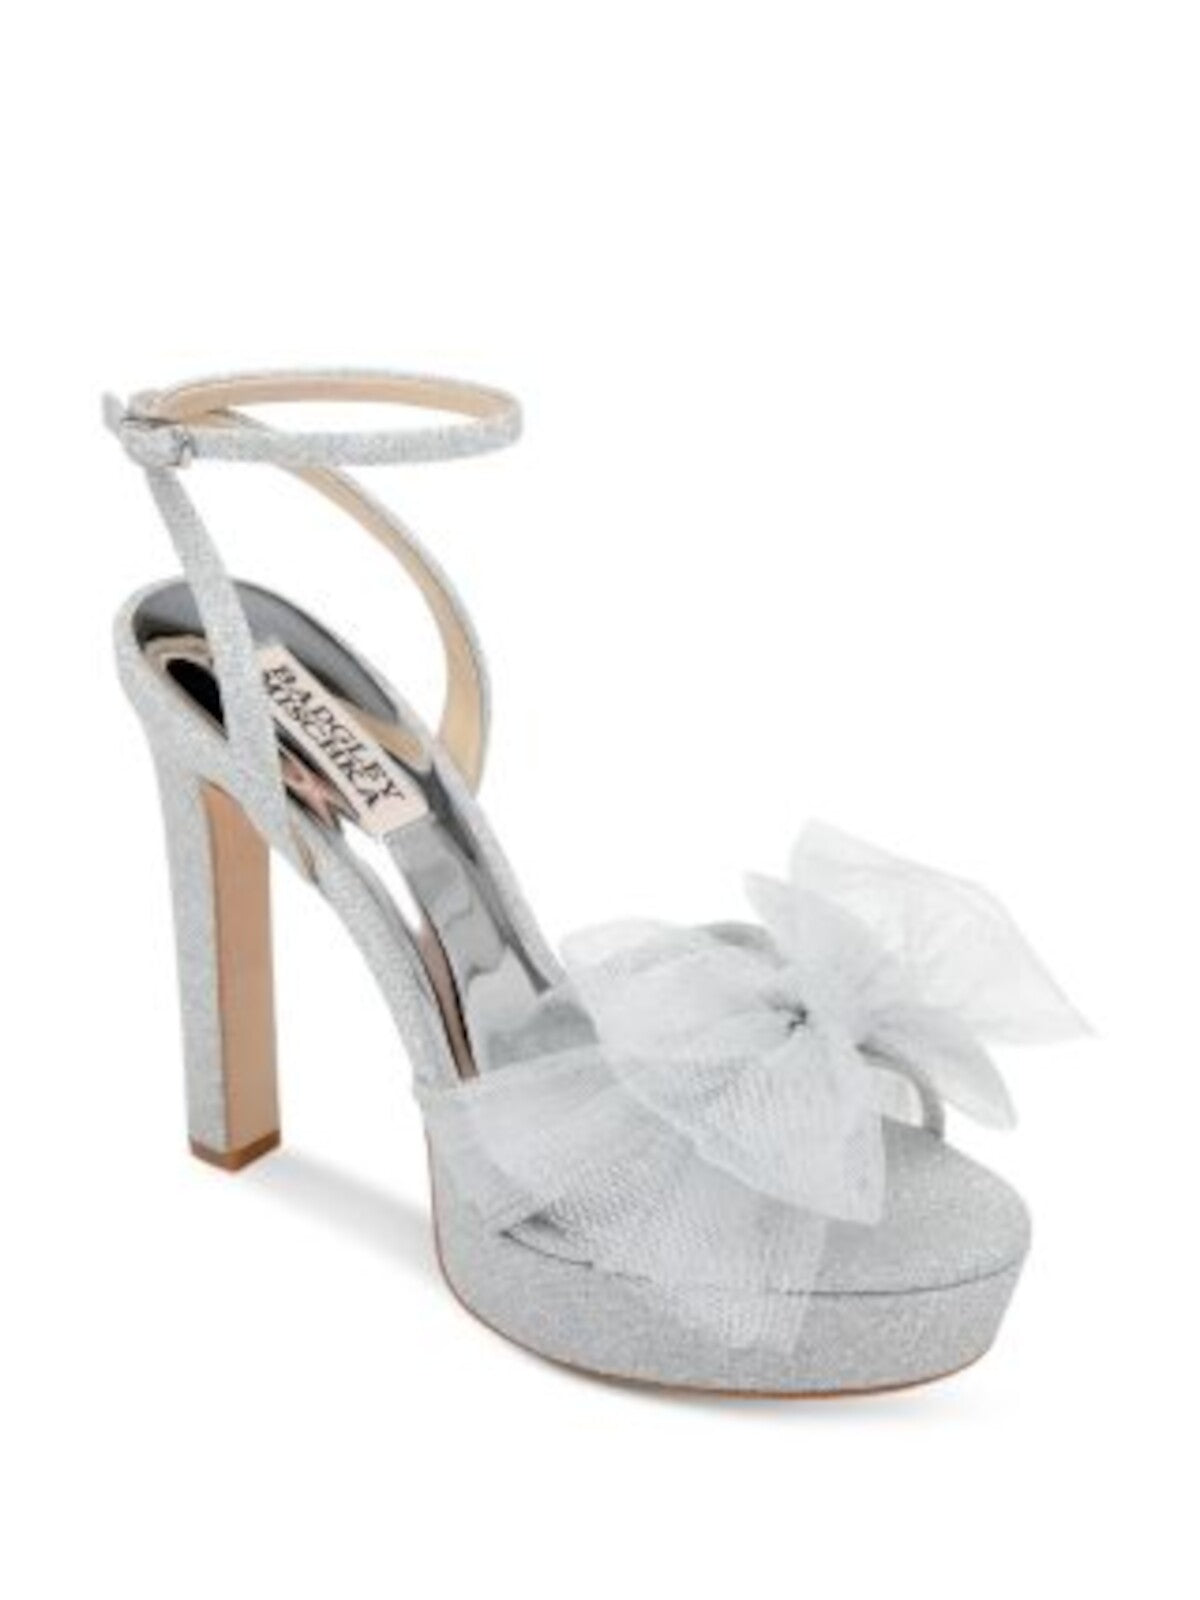 BADGLEY MISCHKA Womens Silver 1" Platform Bow Accent Adjustable Sophie Open Toe Buckle Dress Heeled Sandal 10 M